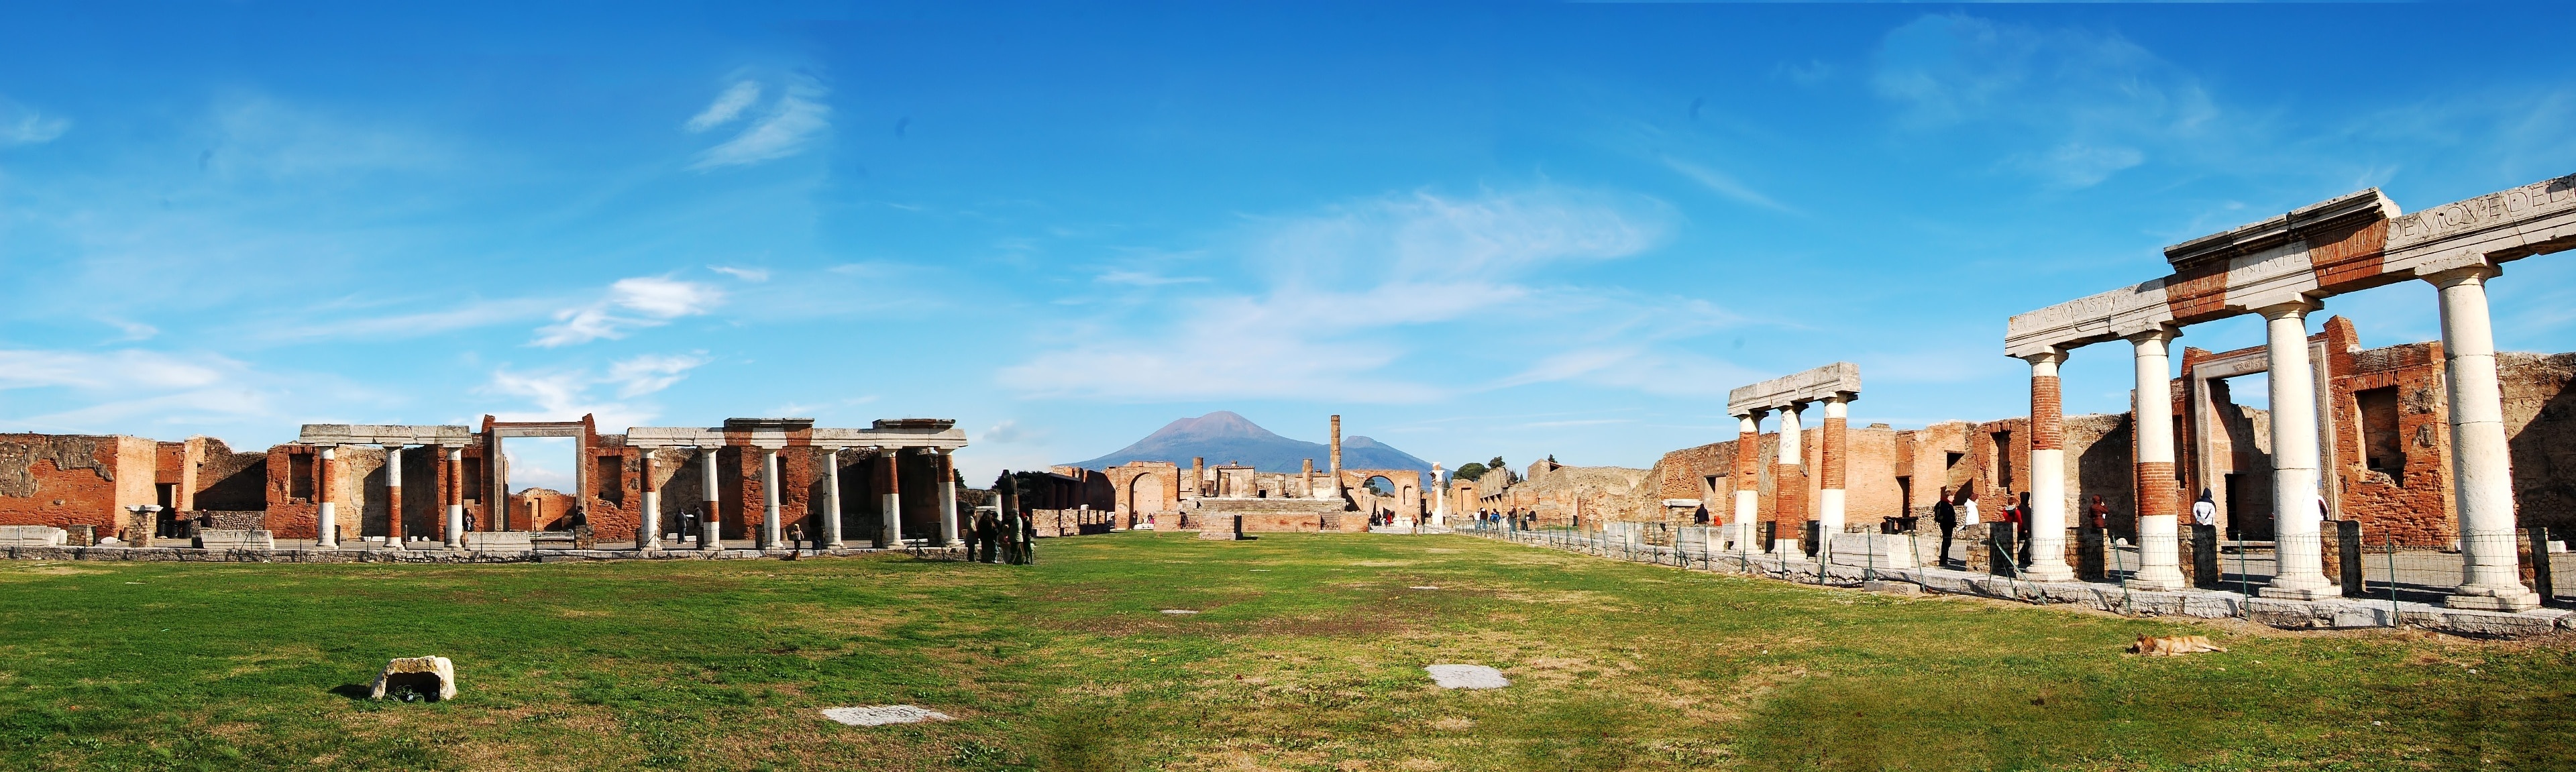 Archaeological park, Pompeii villas, Vacation rental, Italy, 3840x1160 Dual Screen Desktop